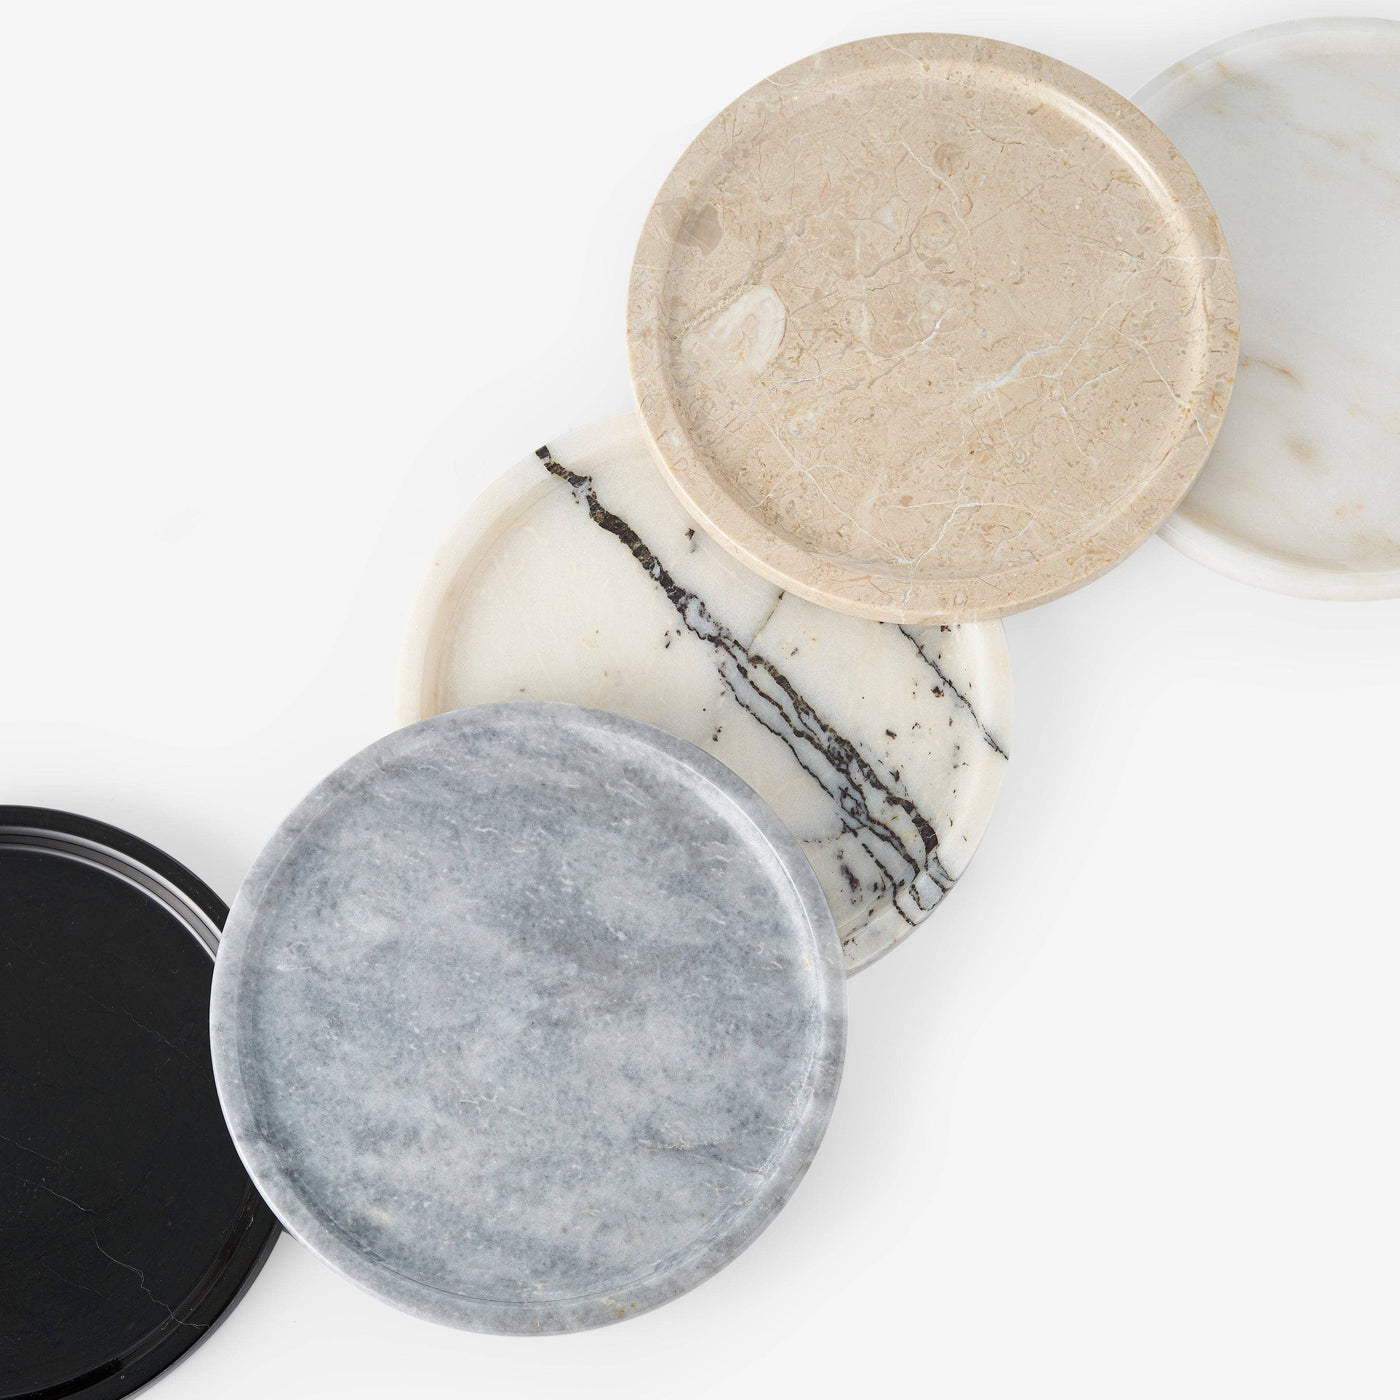 Macerari Marble Round Tray, Black Bathroom Accessories sazy.com